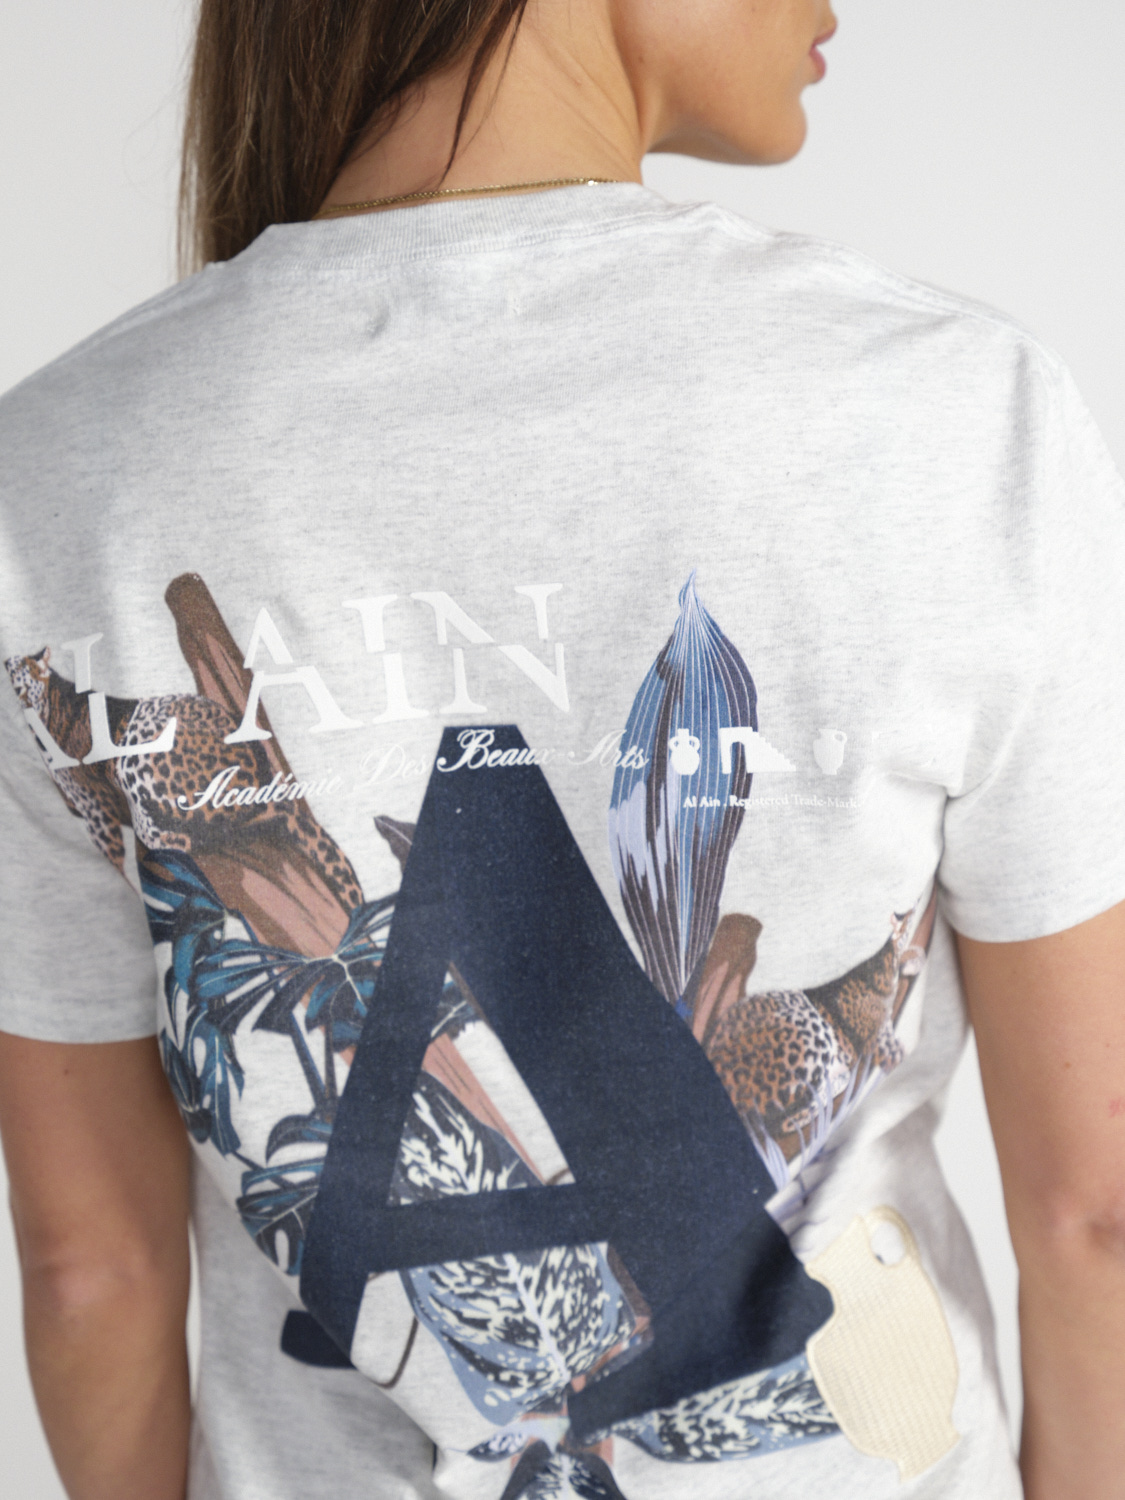 Al Ain T-Shirt with pattern  grey XS/S